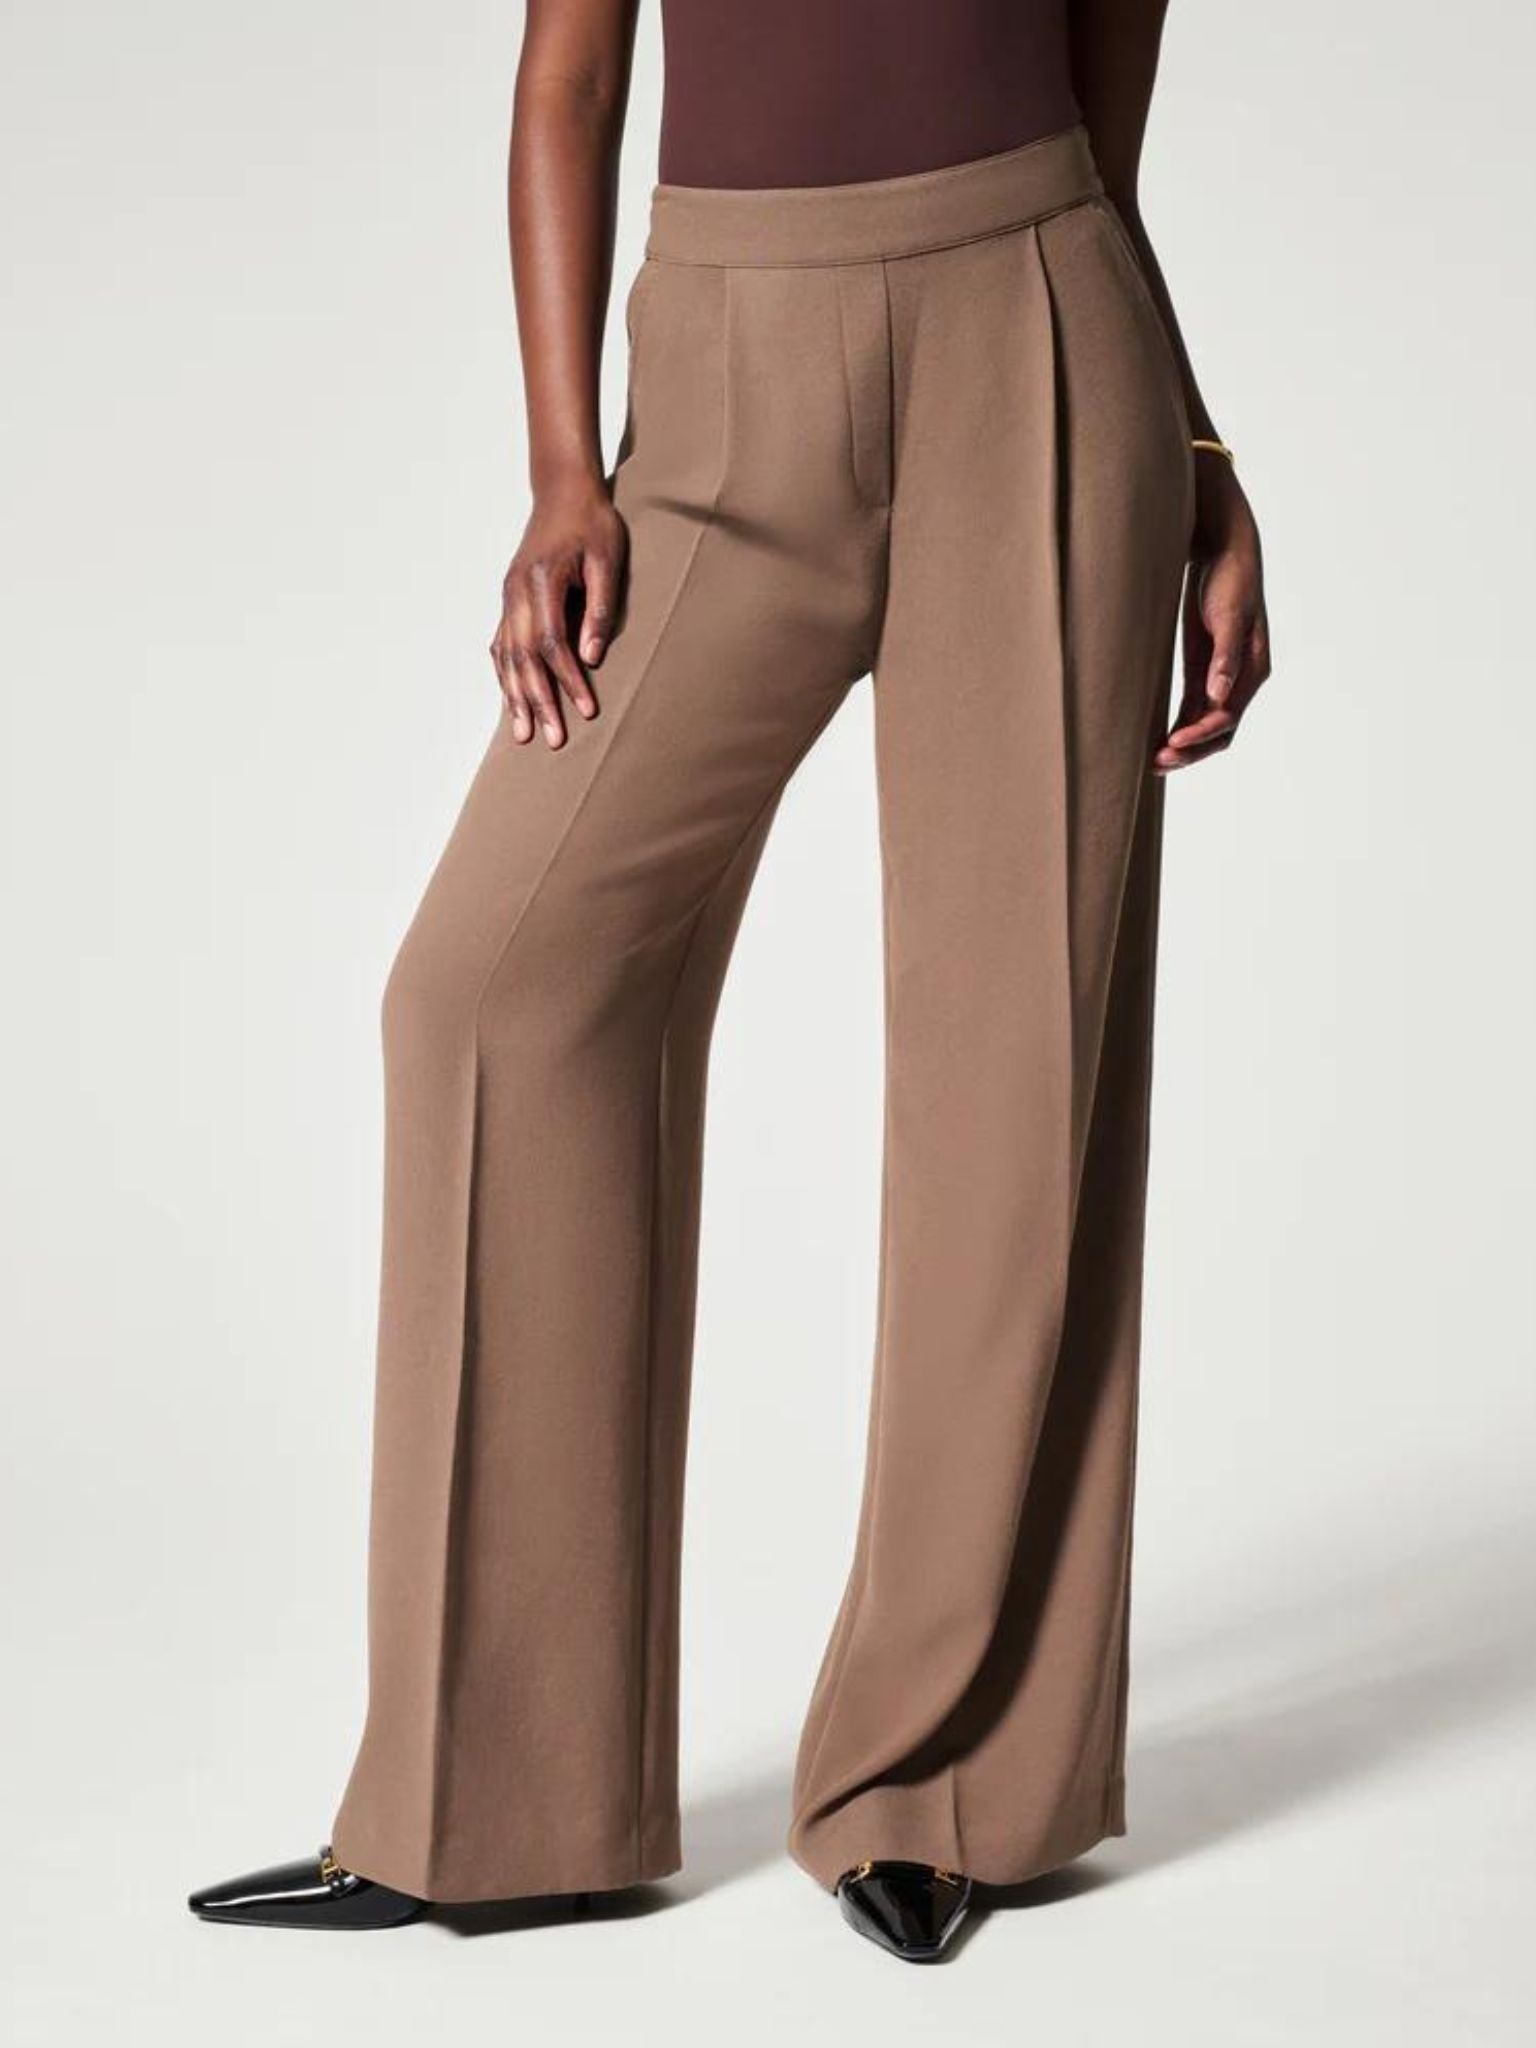 Detales Box Pleated Trouser Set | Women, Pant Sets, Green, Amazon Crepe,  Blazer: Notched Lapel Collar, Blazer: Full Sleeves | Pleated trouser,  Fashion, Aza fashion